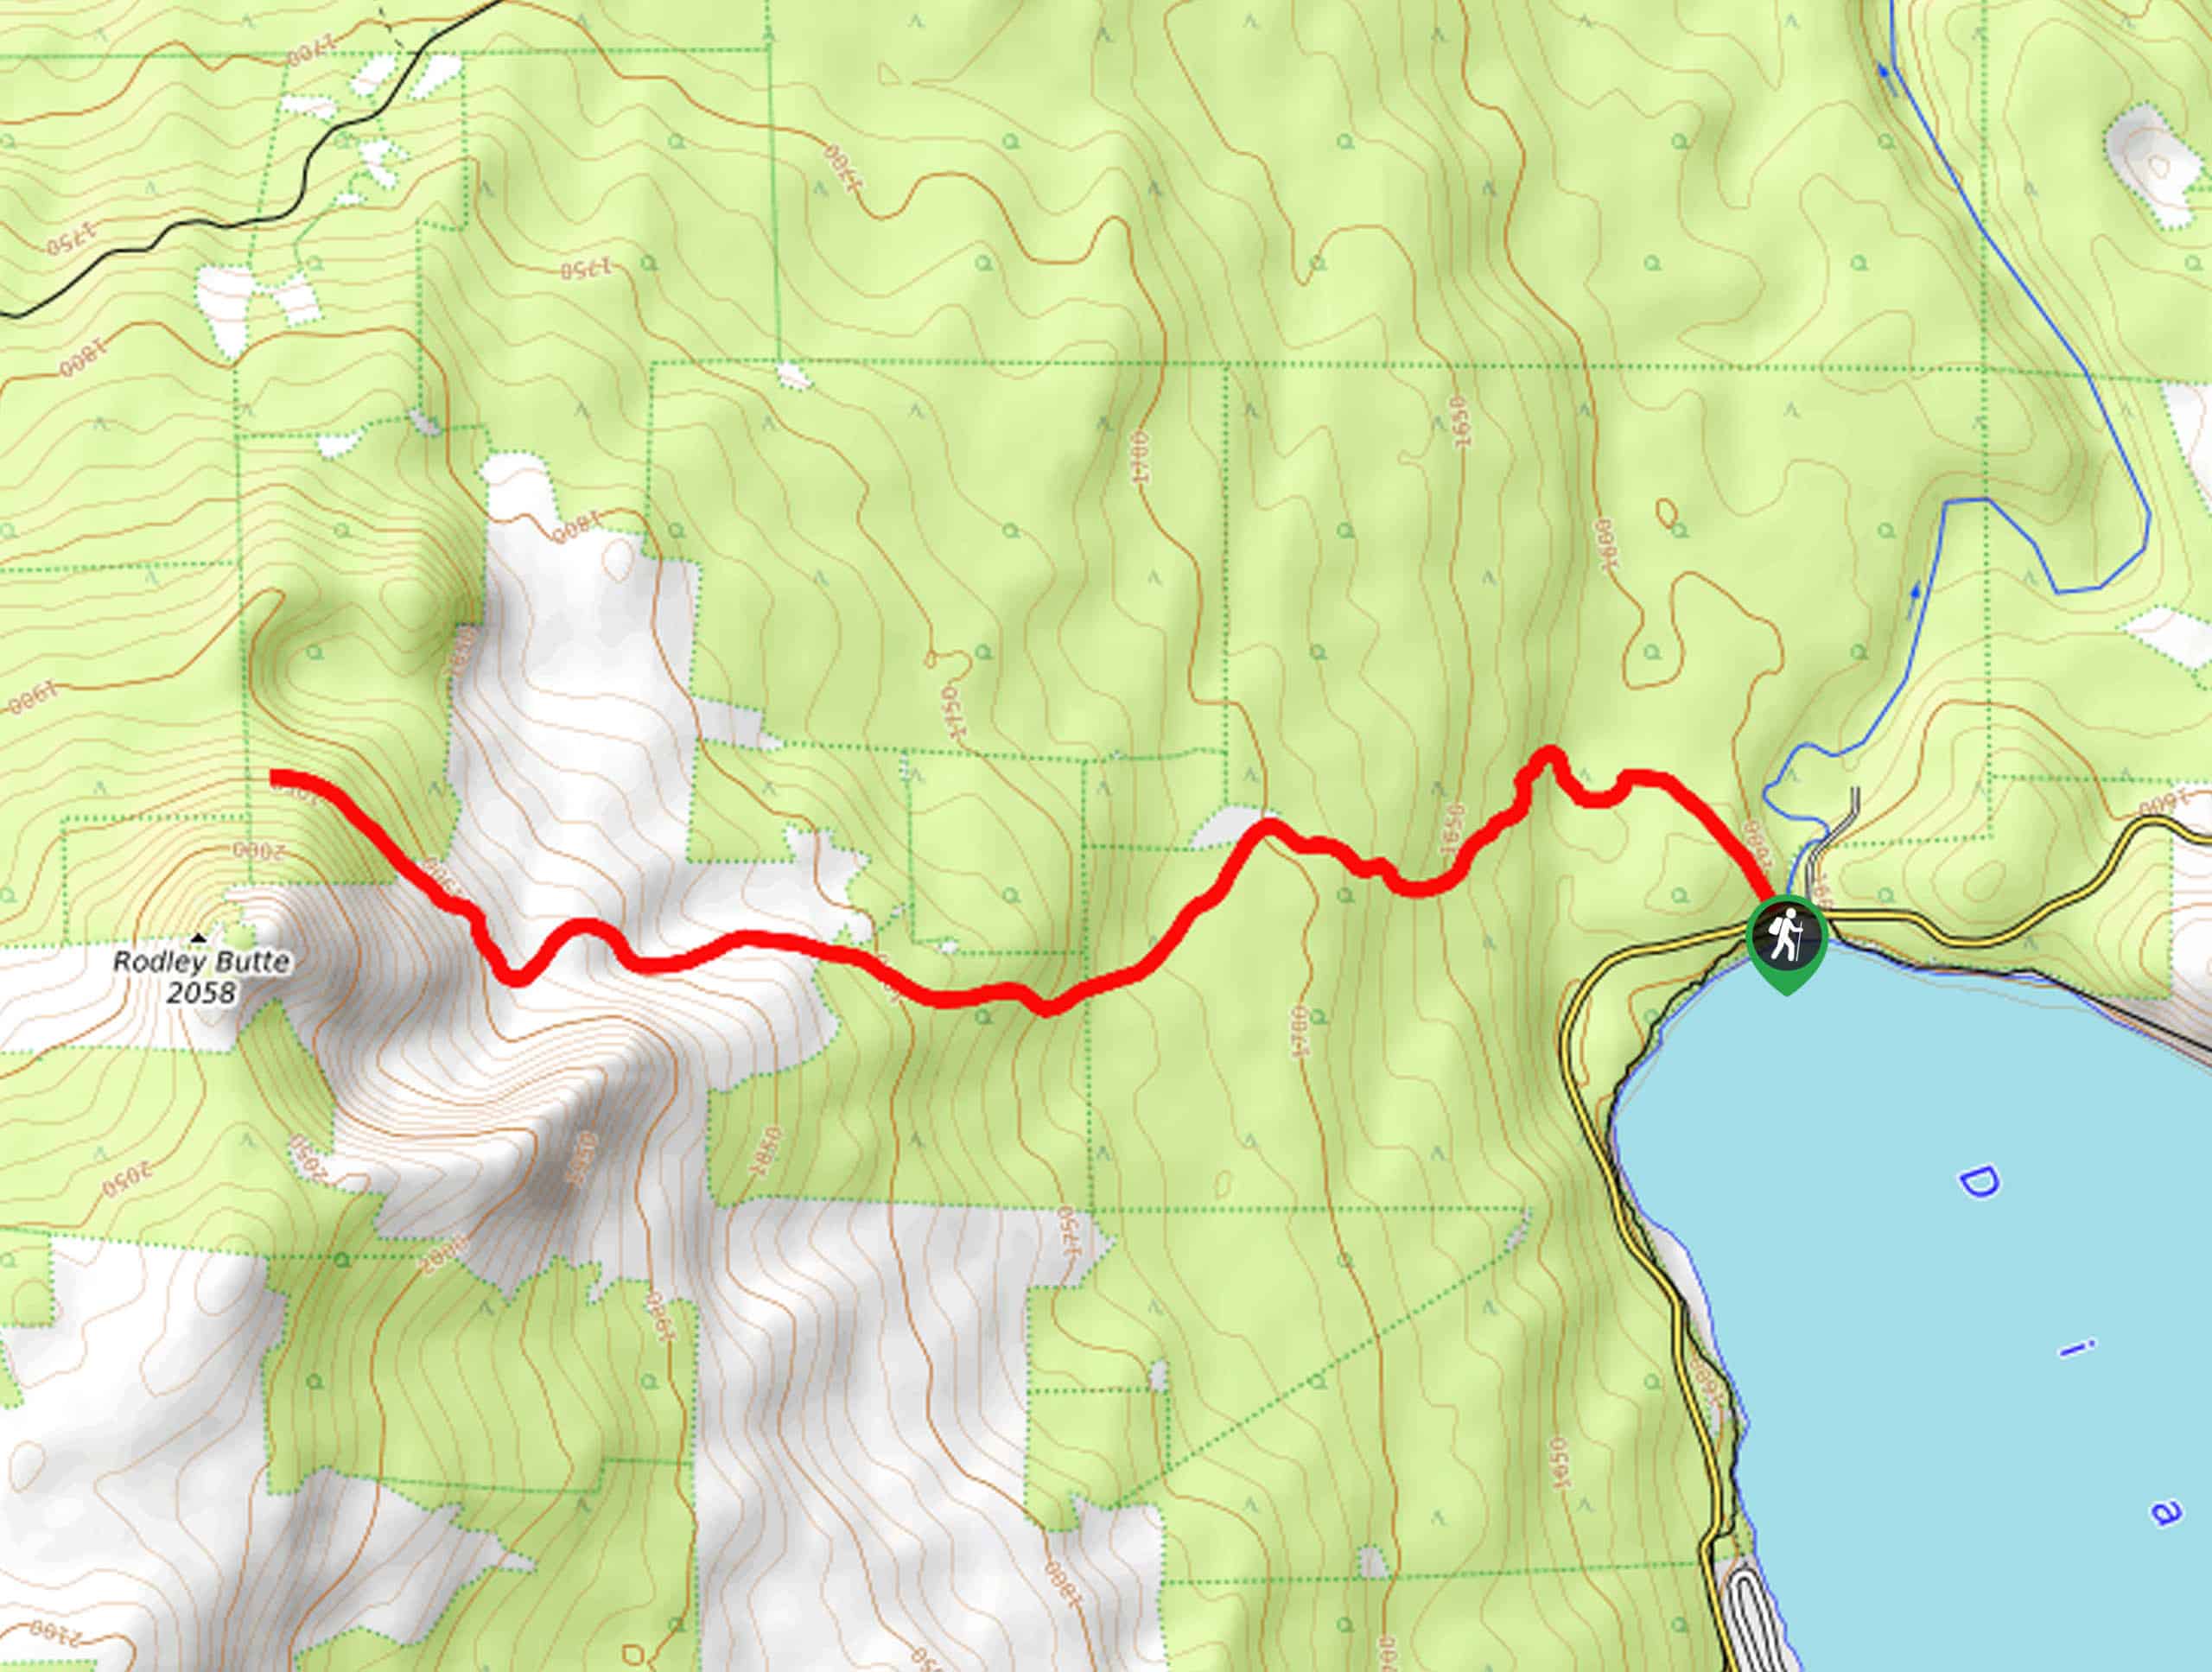 Rodley Butte Trail Map